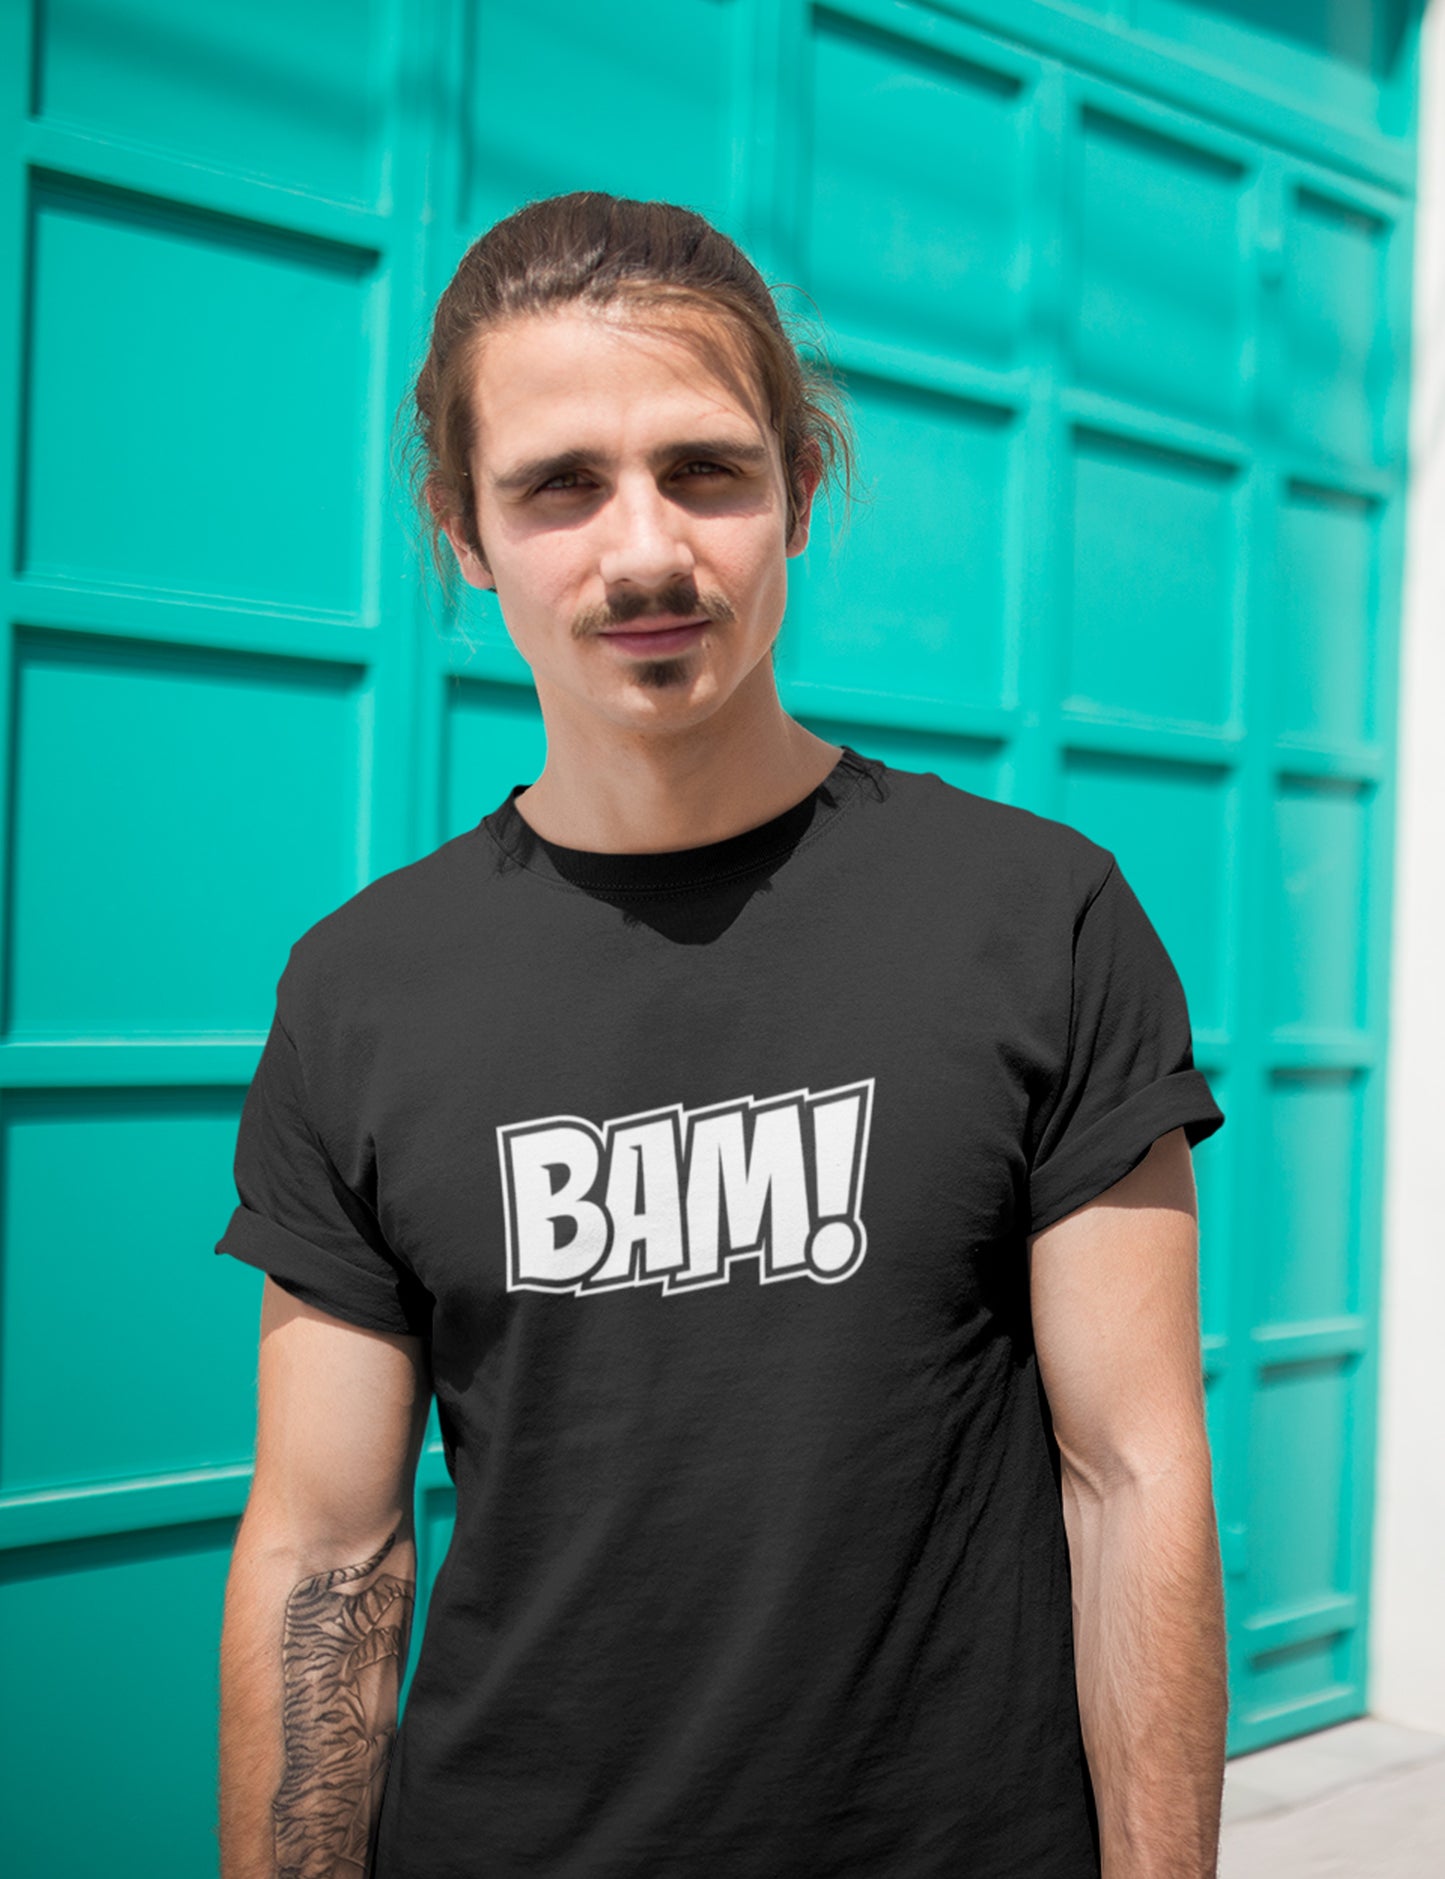 BAM! Logo Shirt